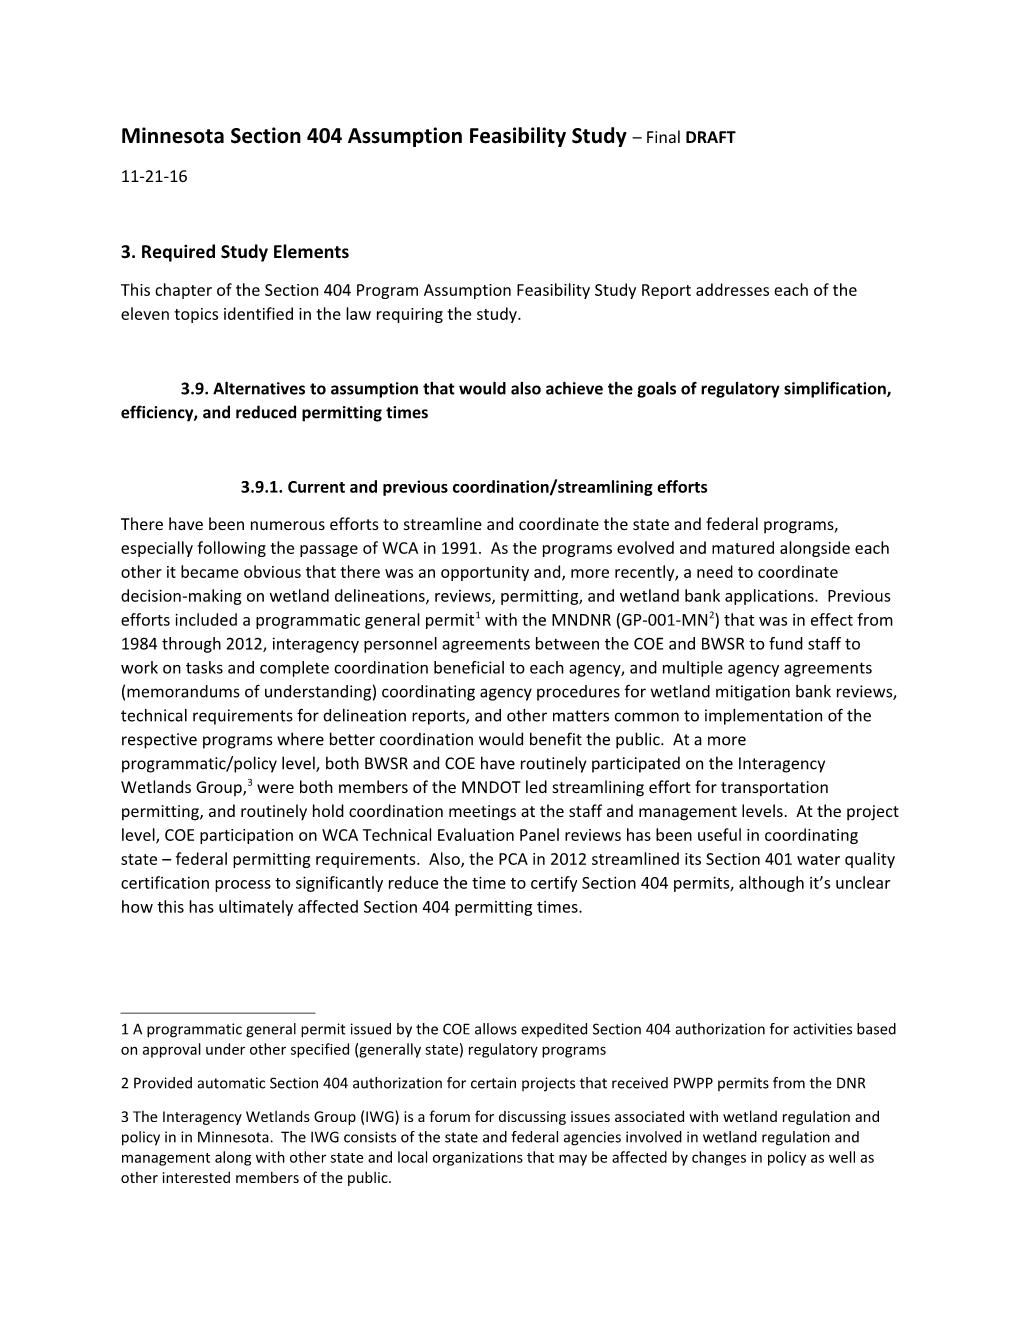 Minnesota Section 404 Assumption Feasibility Study Final DRAFT